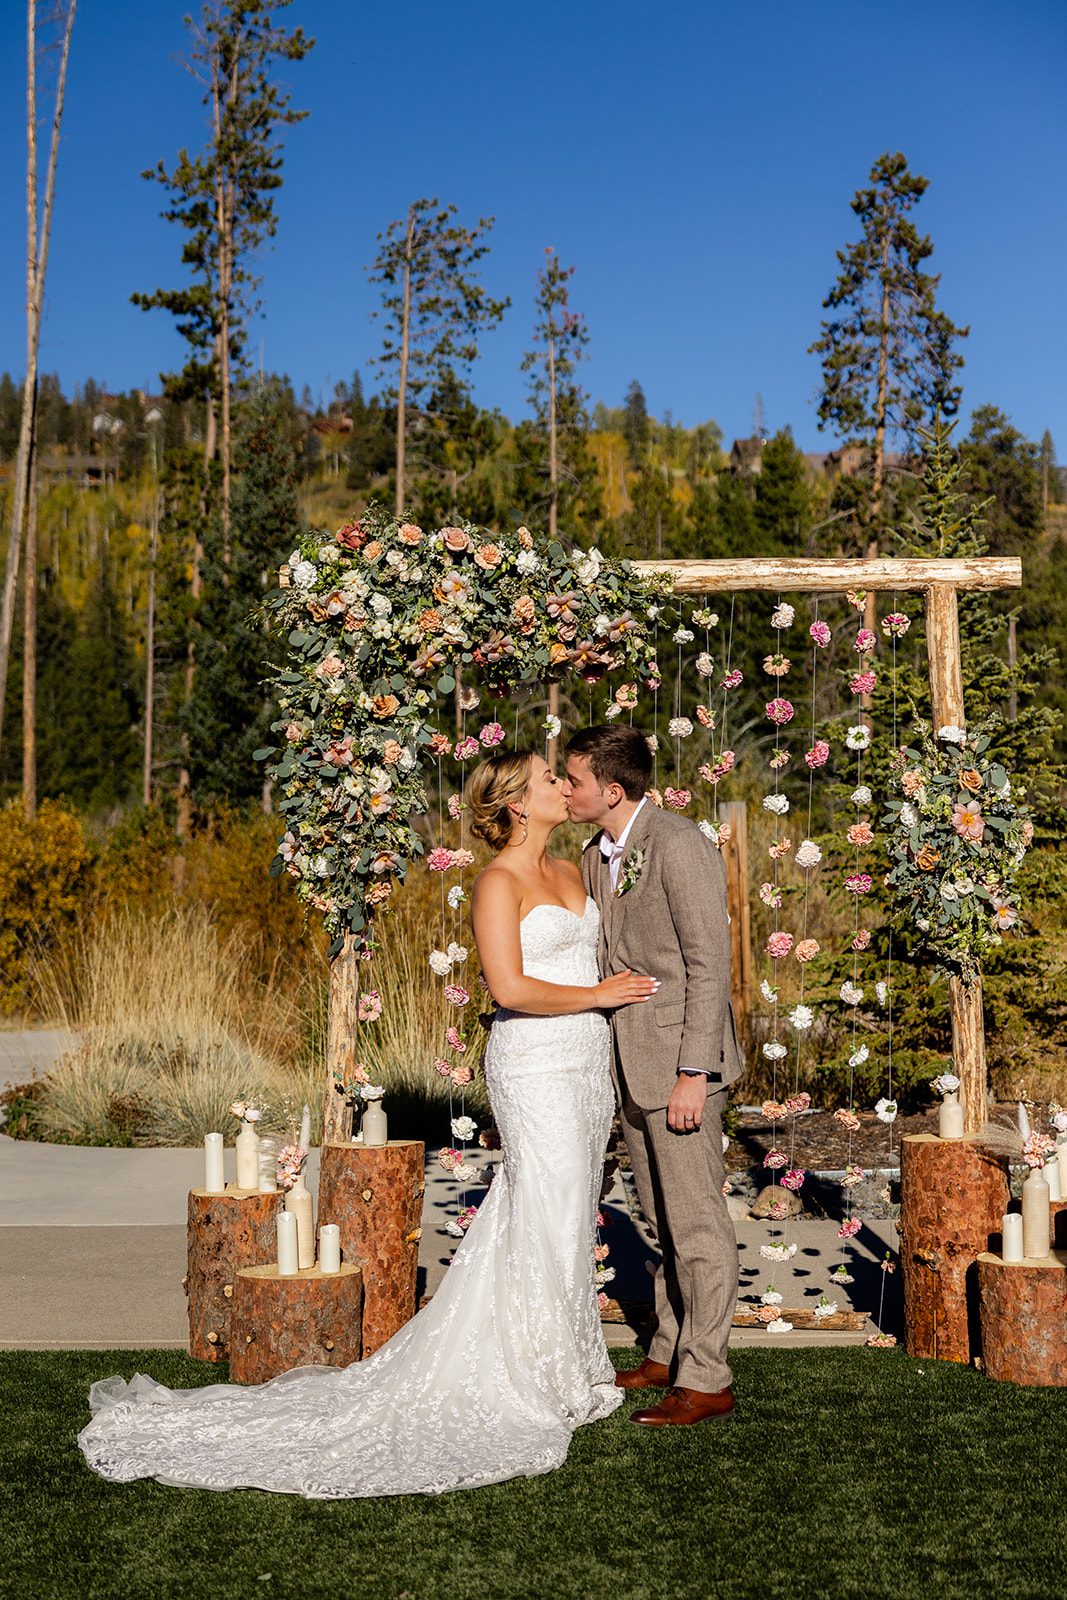 Wedding Ceremony Headwaters Winter Park Colorado, Floral wedding altar, Floral backdrop wedding, Flower wedding arch ideas